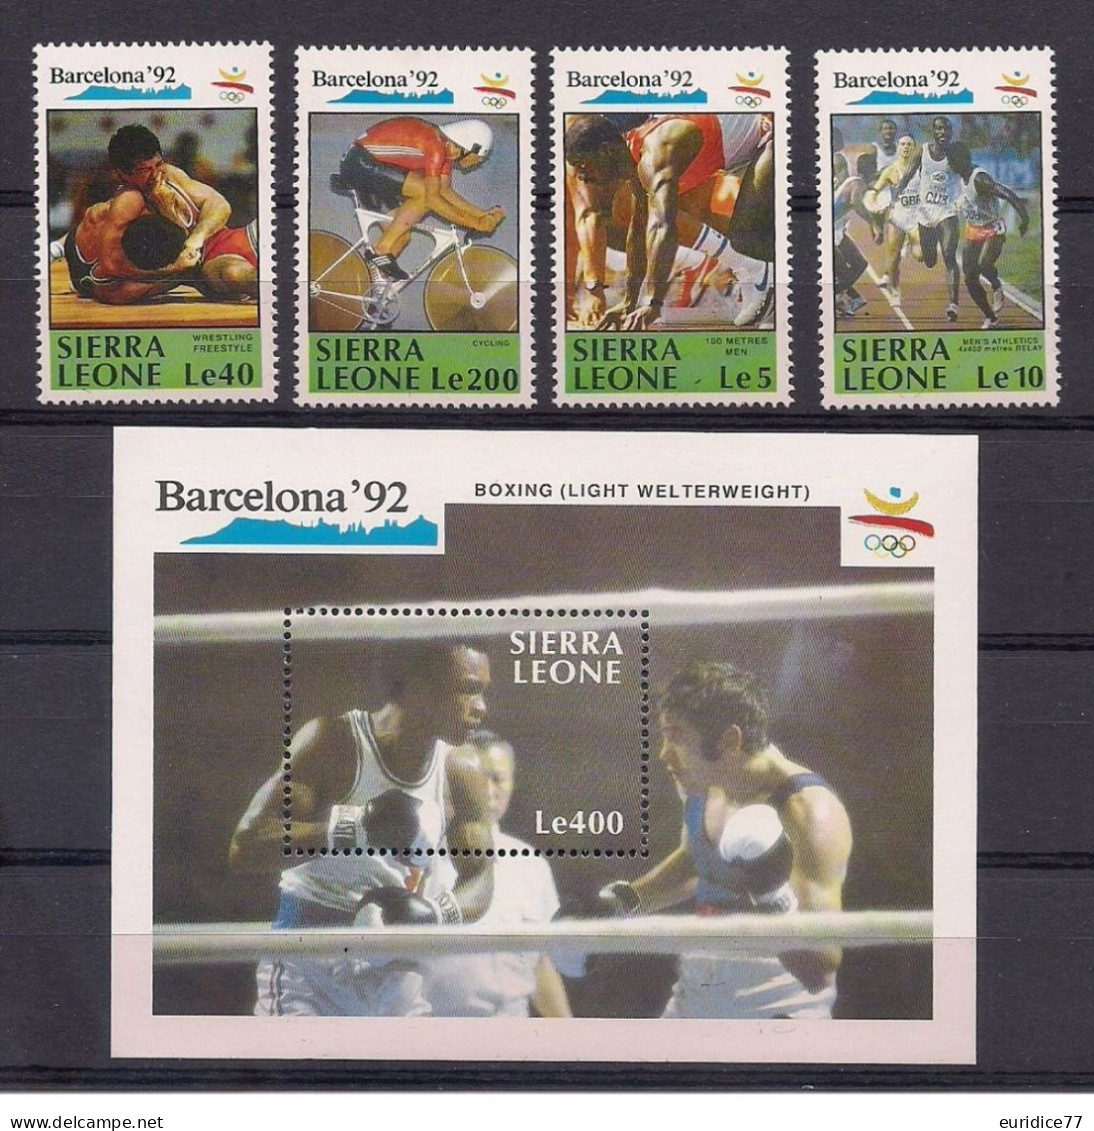 Sierra Leone 1990 - Olympic Games Barcelona 92 Mnh** - Summer 1992: Barcelona